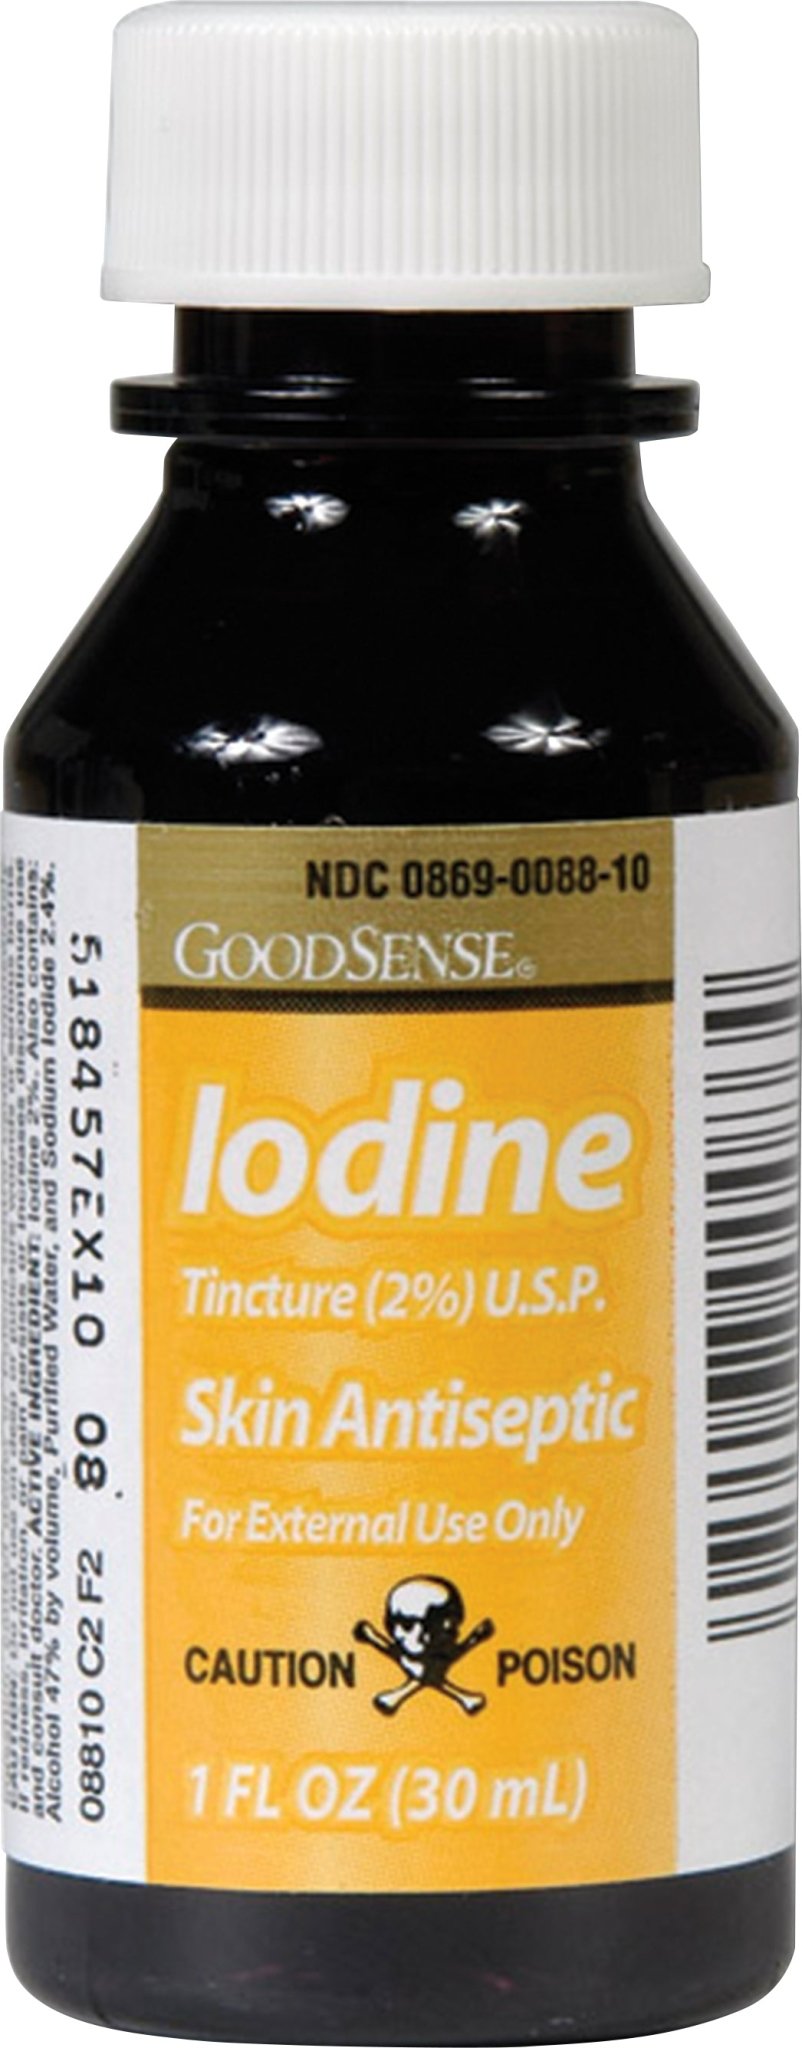 EA/1 - 2% Iodine Tincture Skin Antiseptic, 1 oz. - Best Buy Medical Supplies